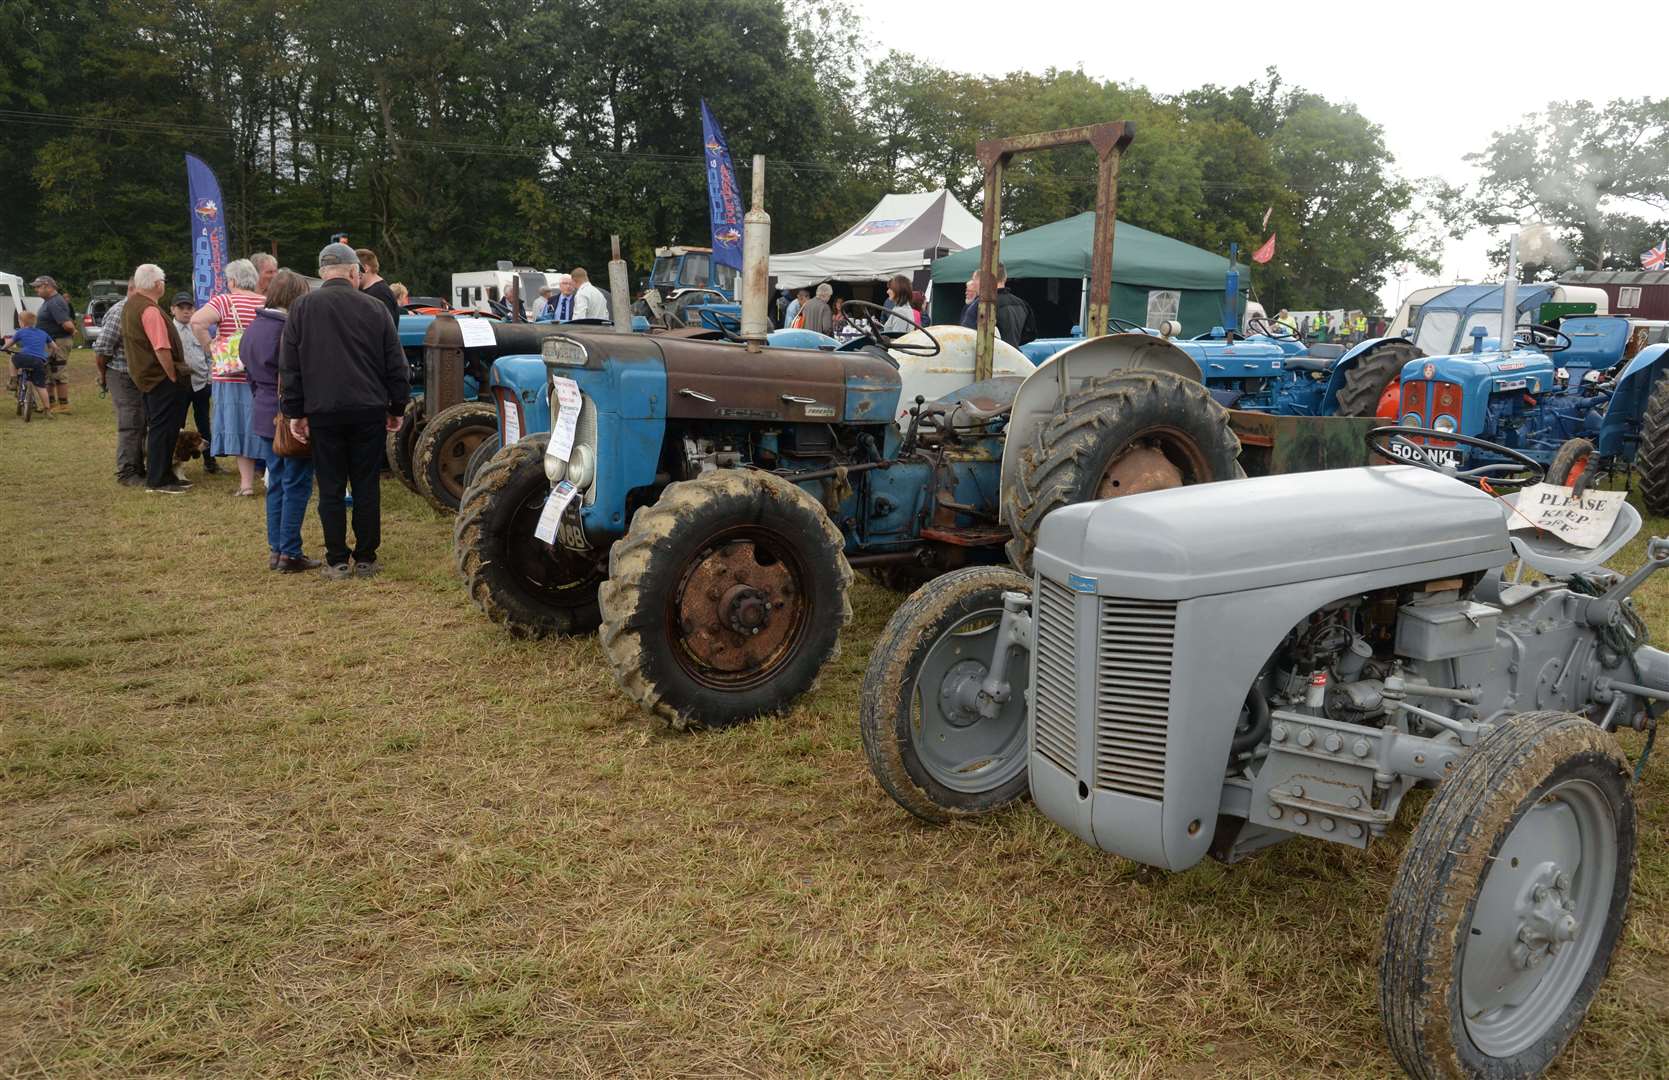 Biddenden Tractorfest will be back Picture: Chris Davey